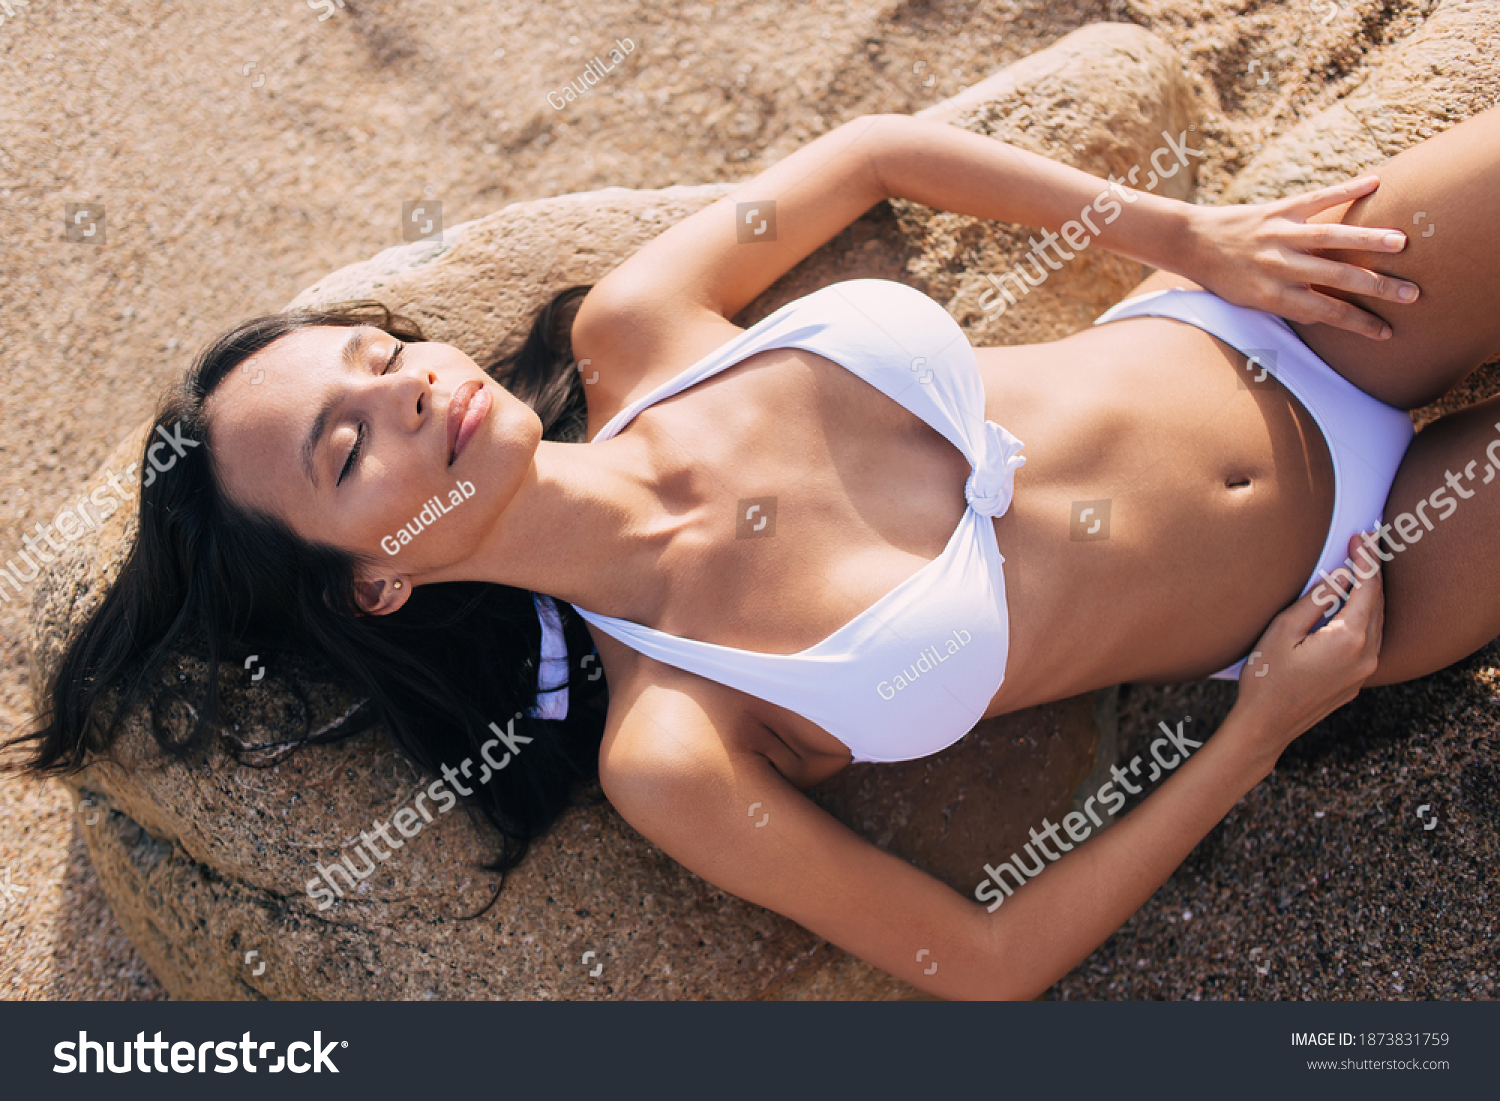 Pretty amateur girl takes off bikini on a beach